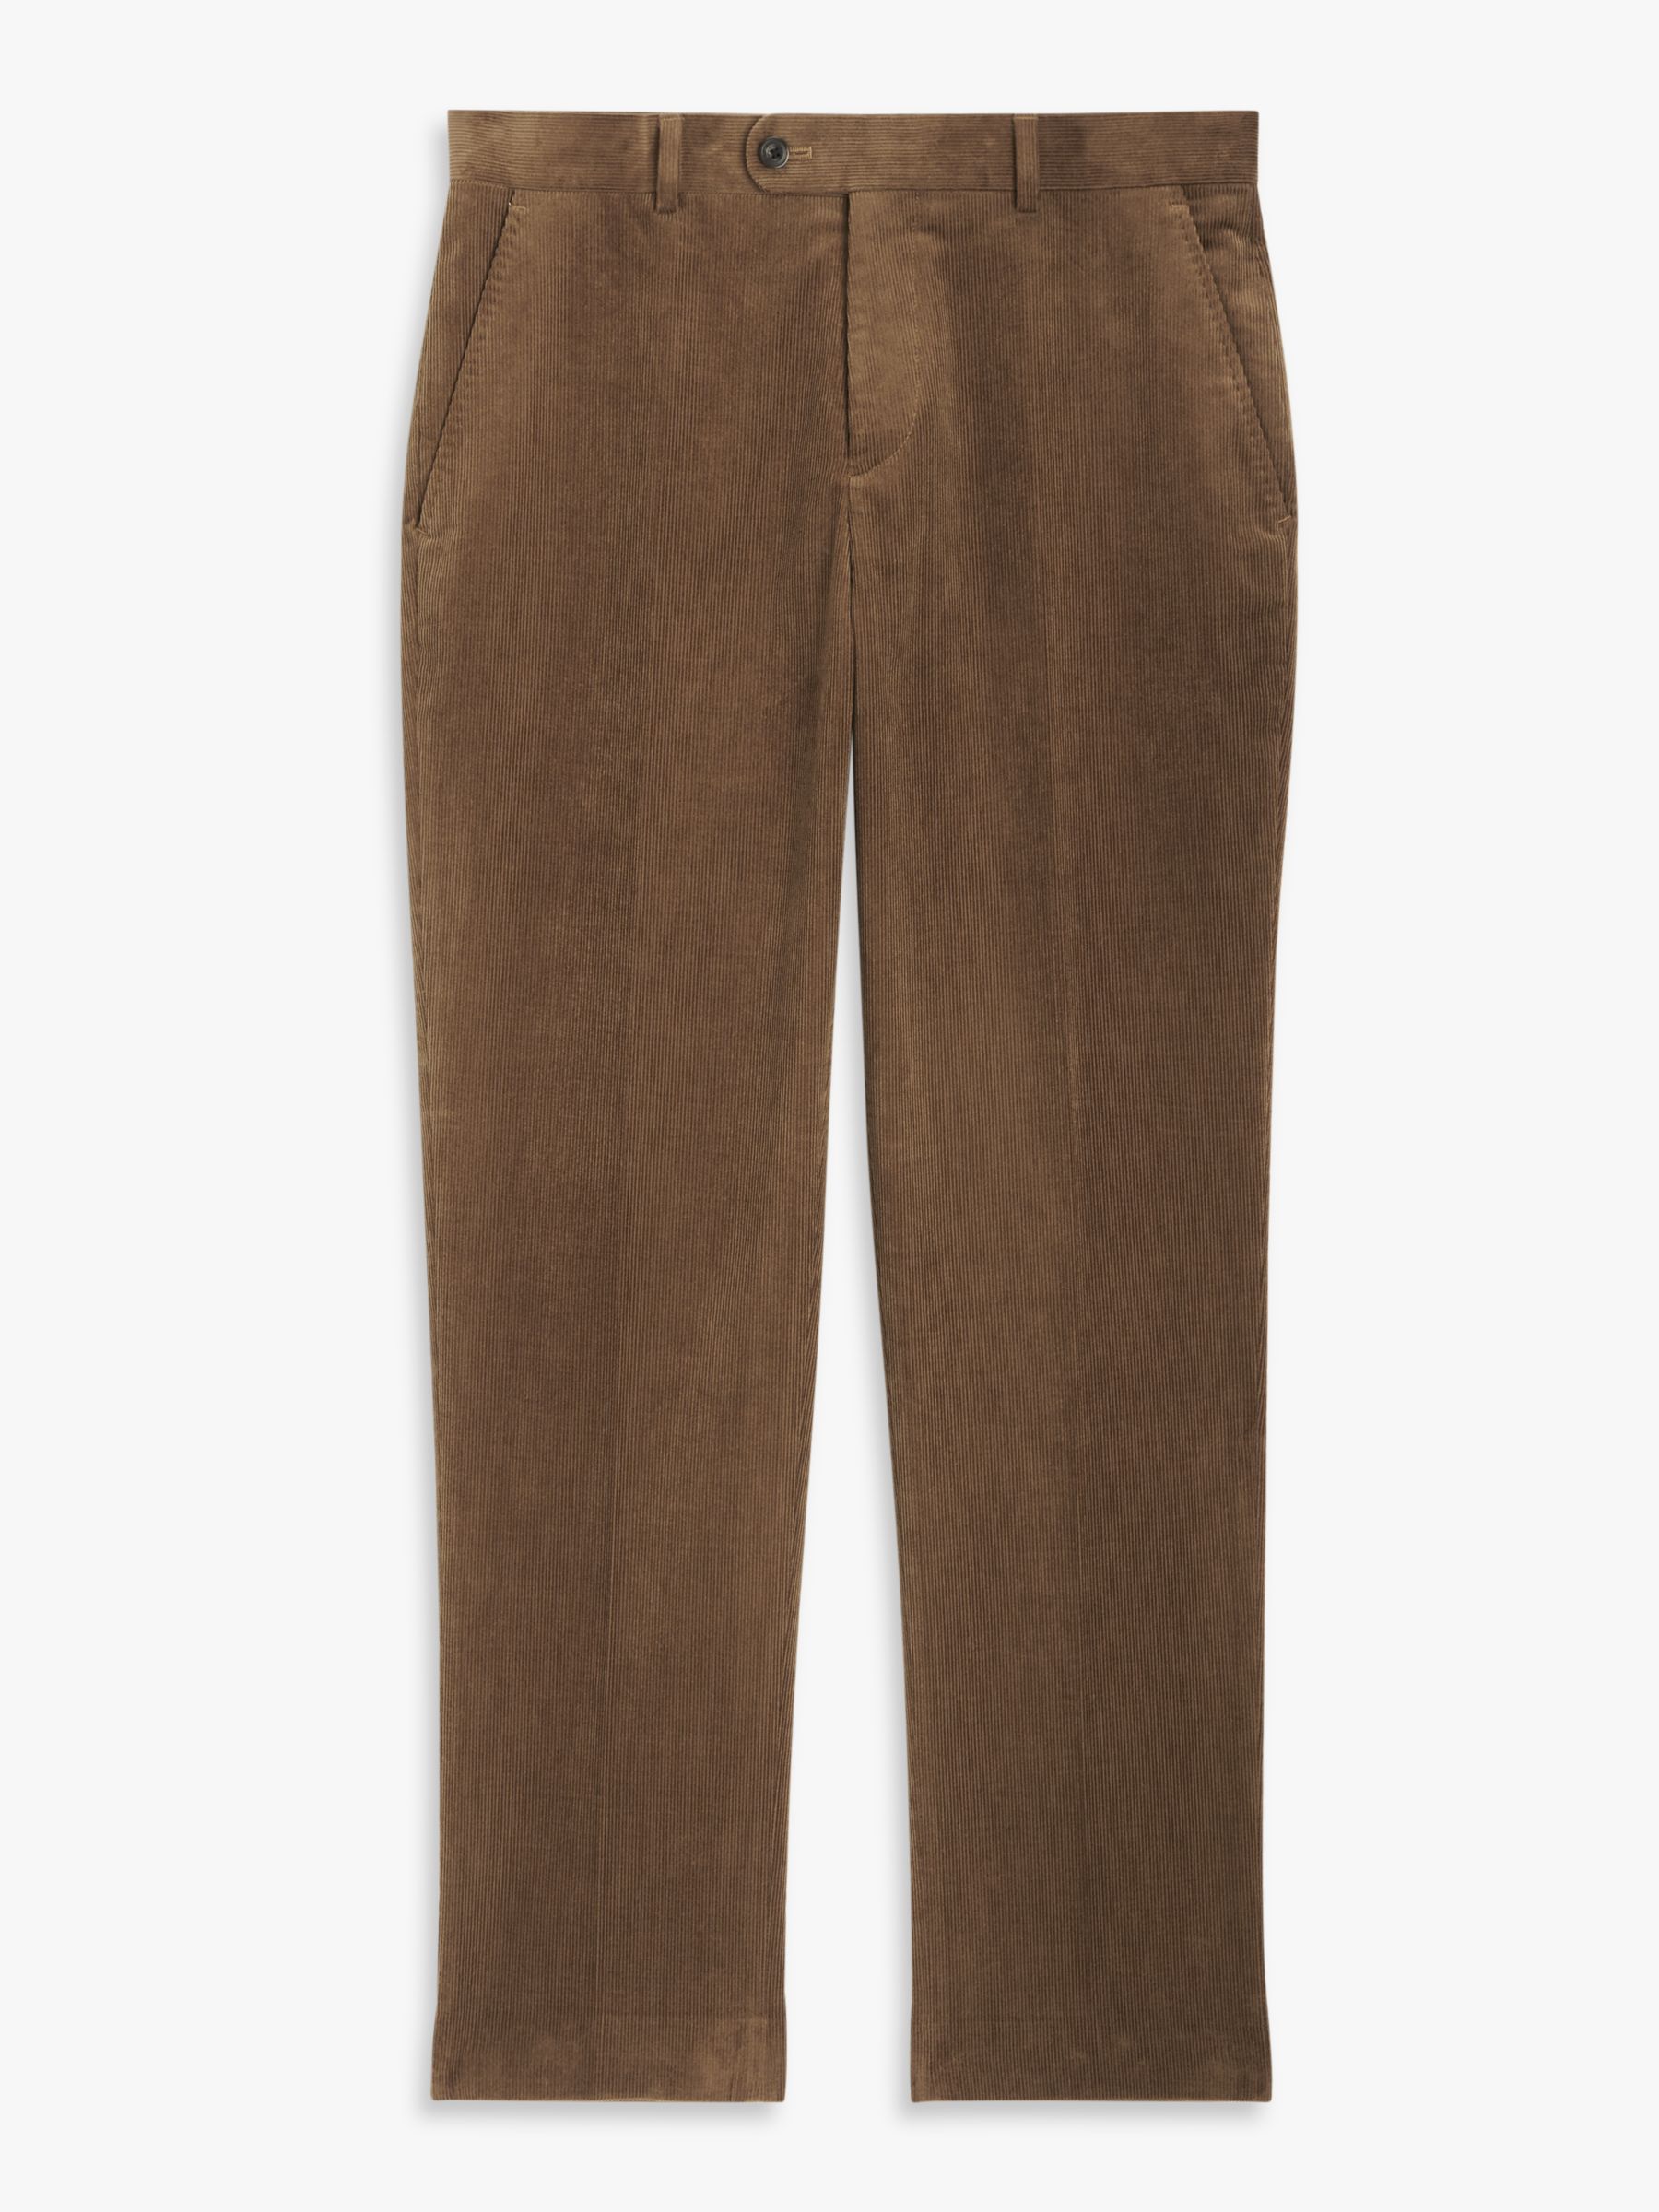 Buy John Lewis Corduroy Regular Fit Trousers Online at johnlewis.com